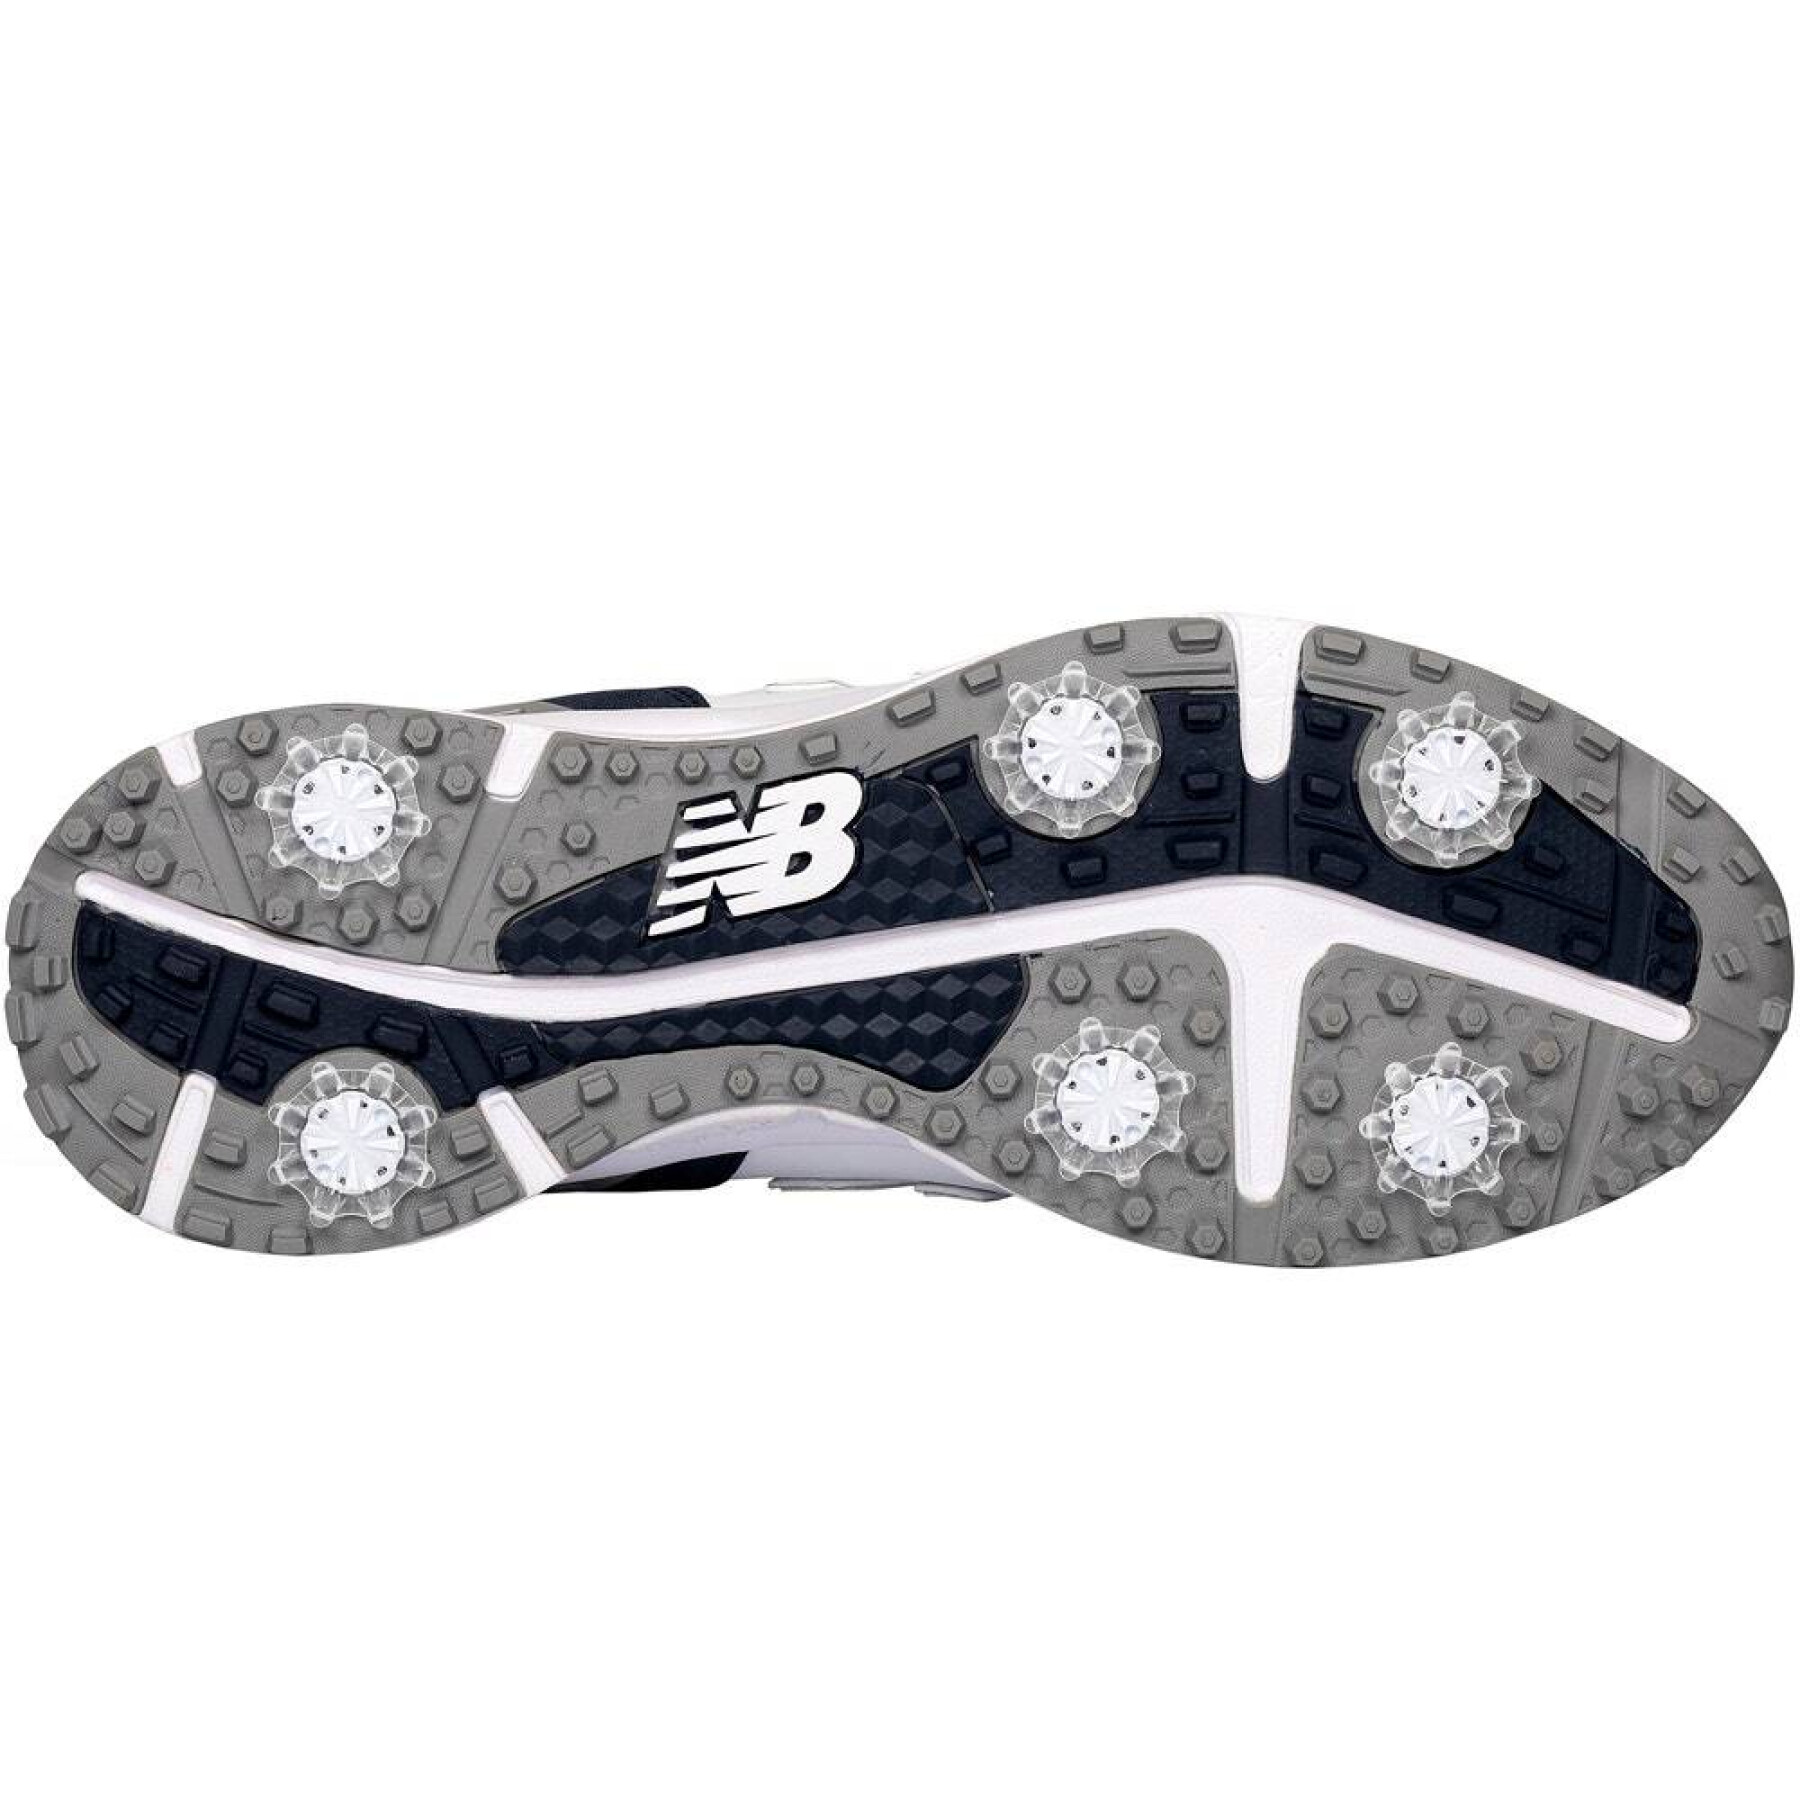 Golf shoes New Balance 997 SL